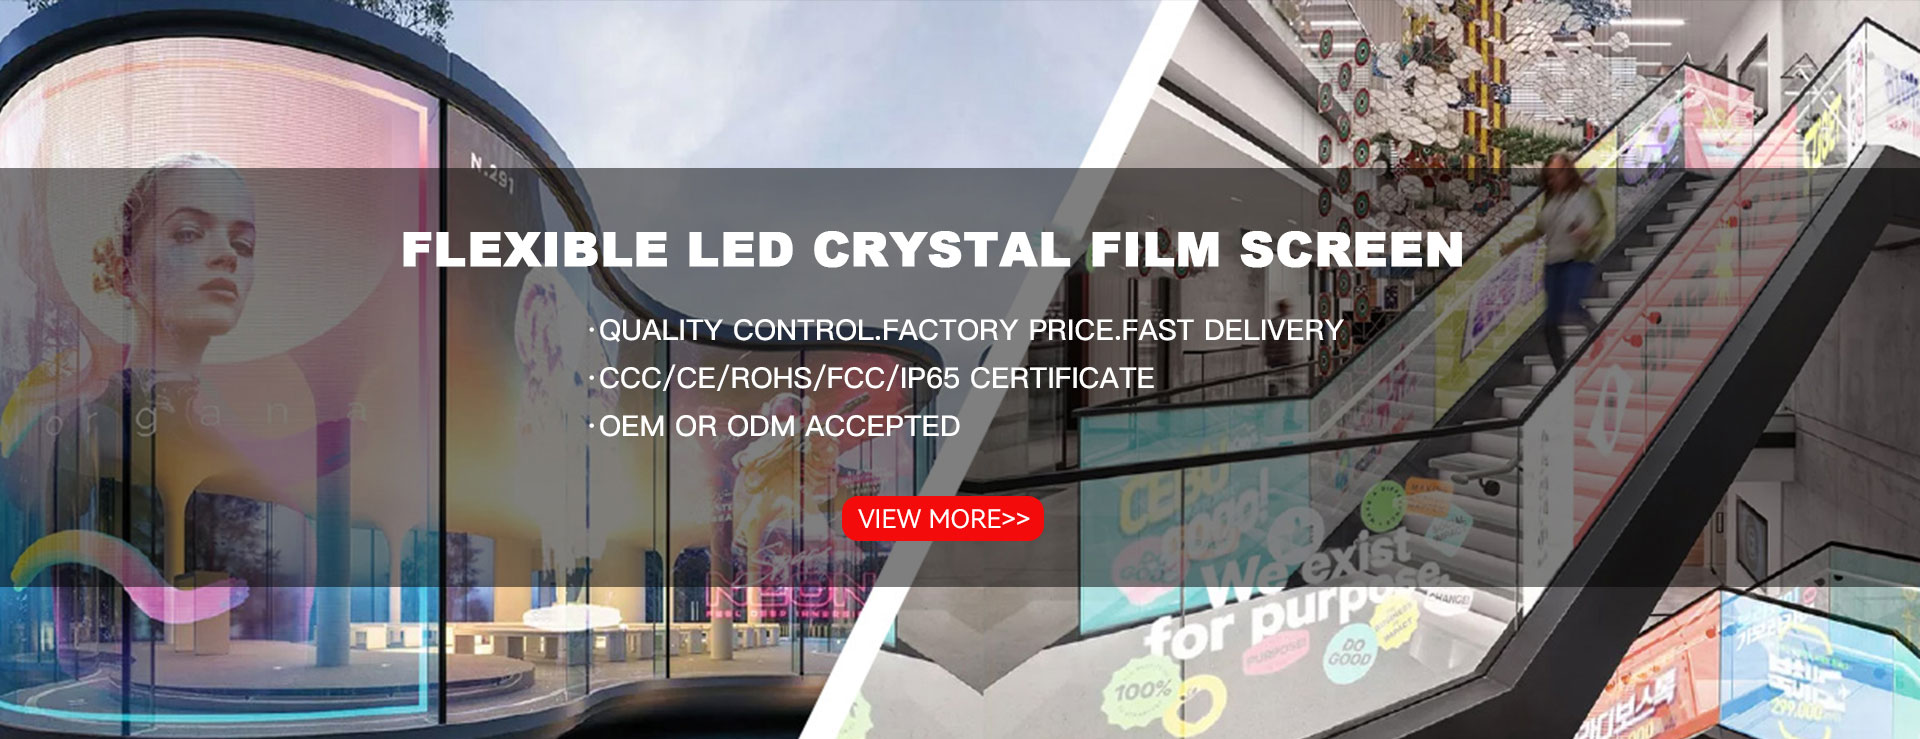 flexible led crystal film screen